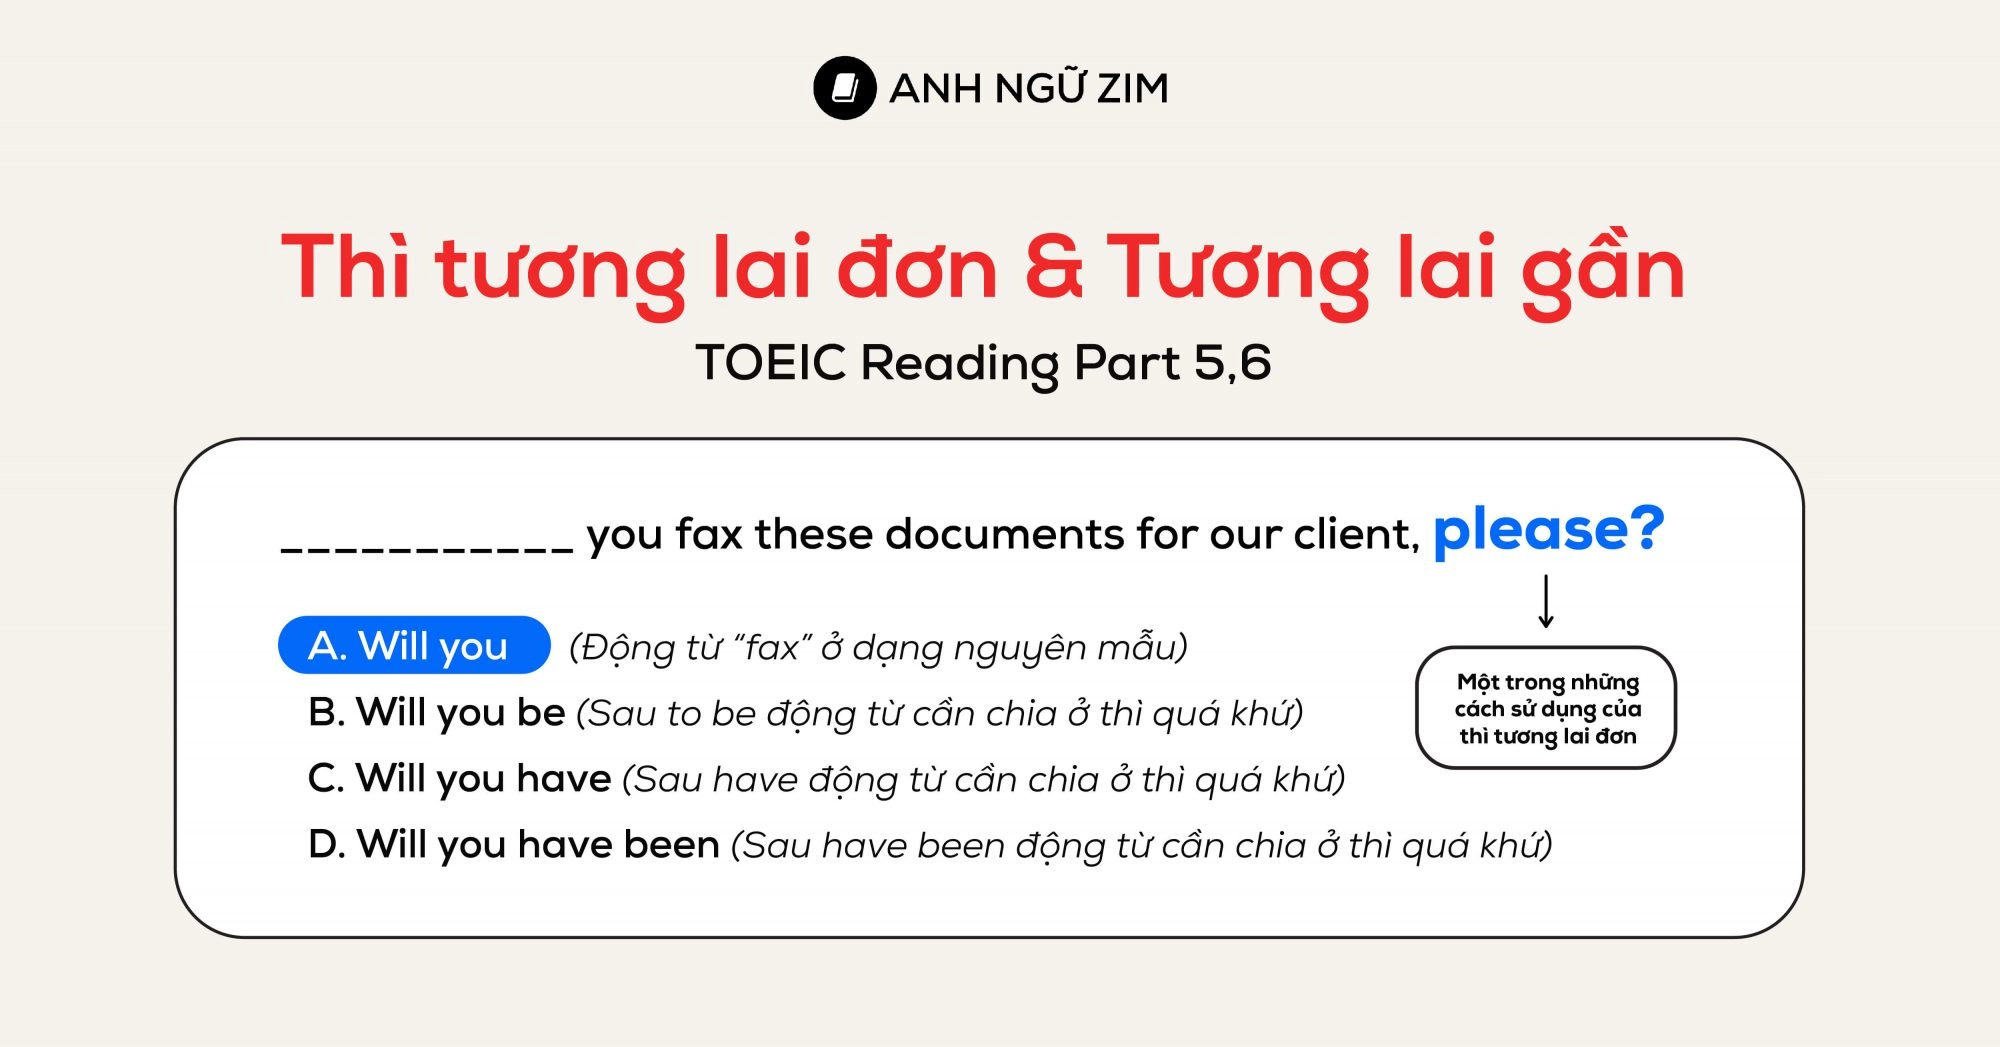 toeic reading part 5 6 thi tuong lai don tuong lai gan va ung dung tra loi cau hoi